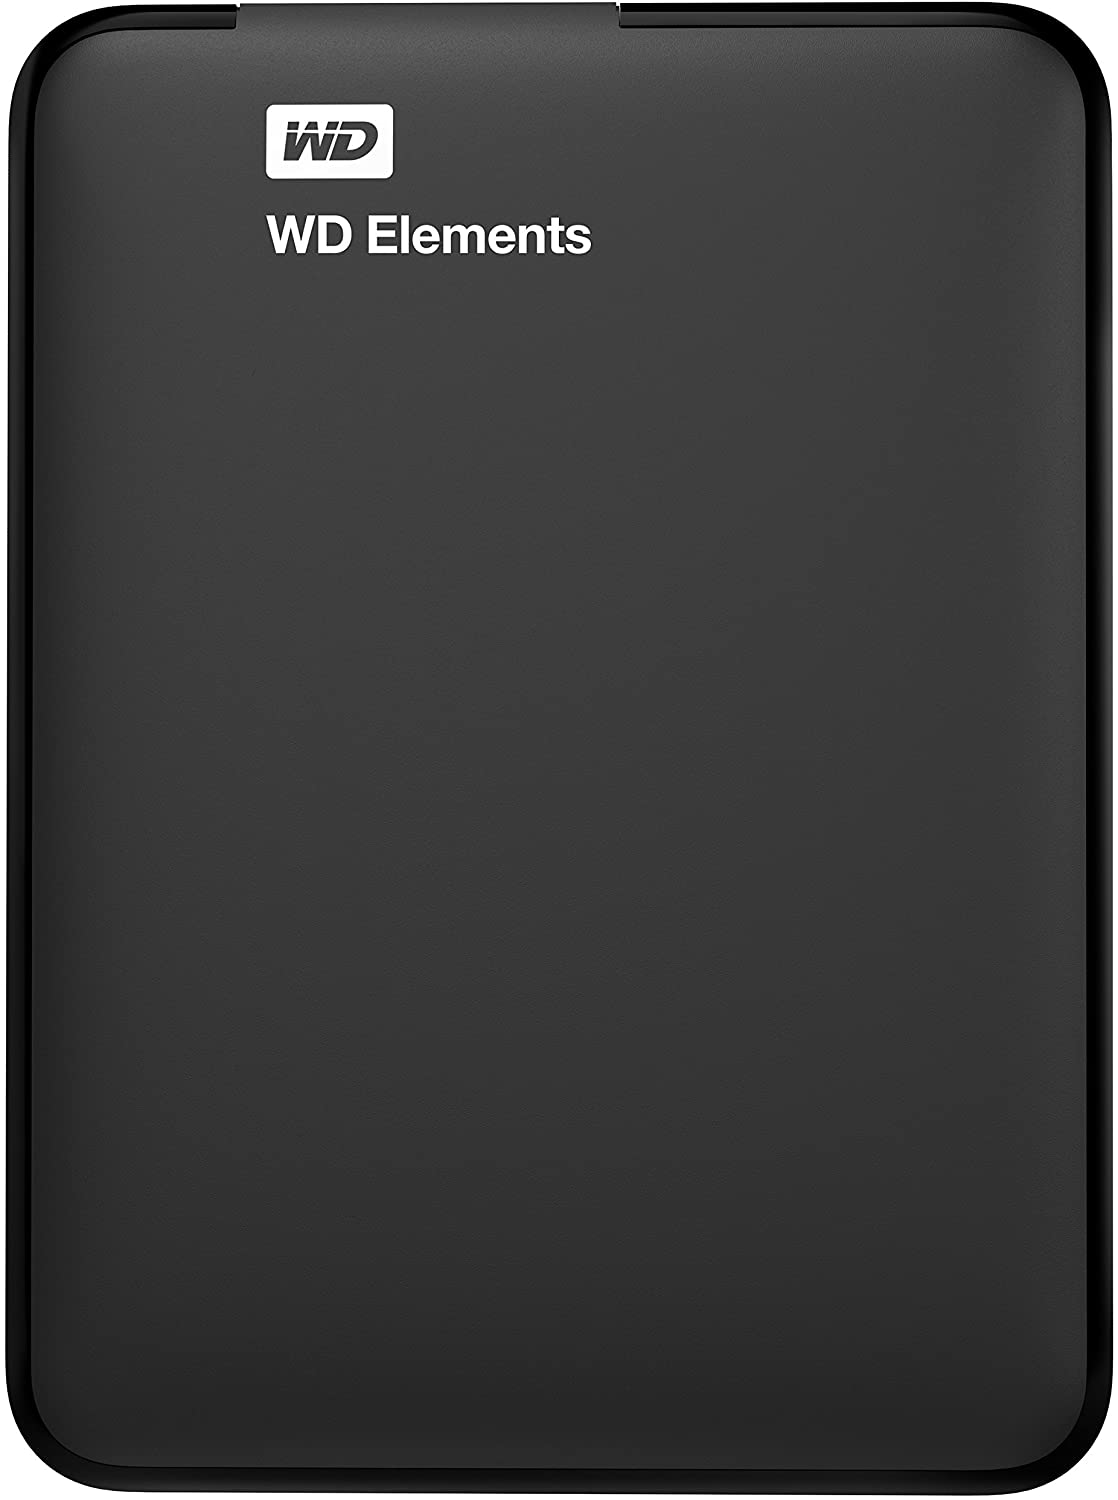 WD Elements 1TB Portable Hard Drive